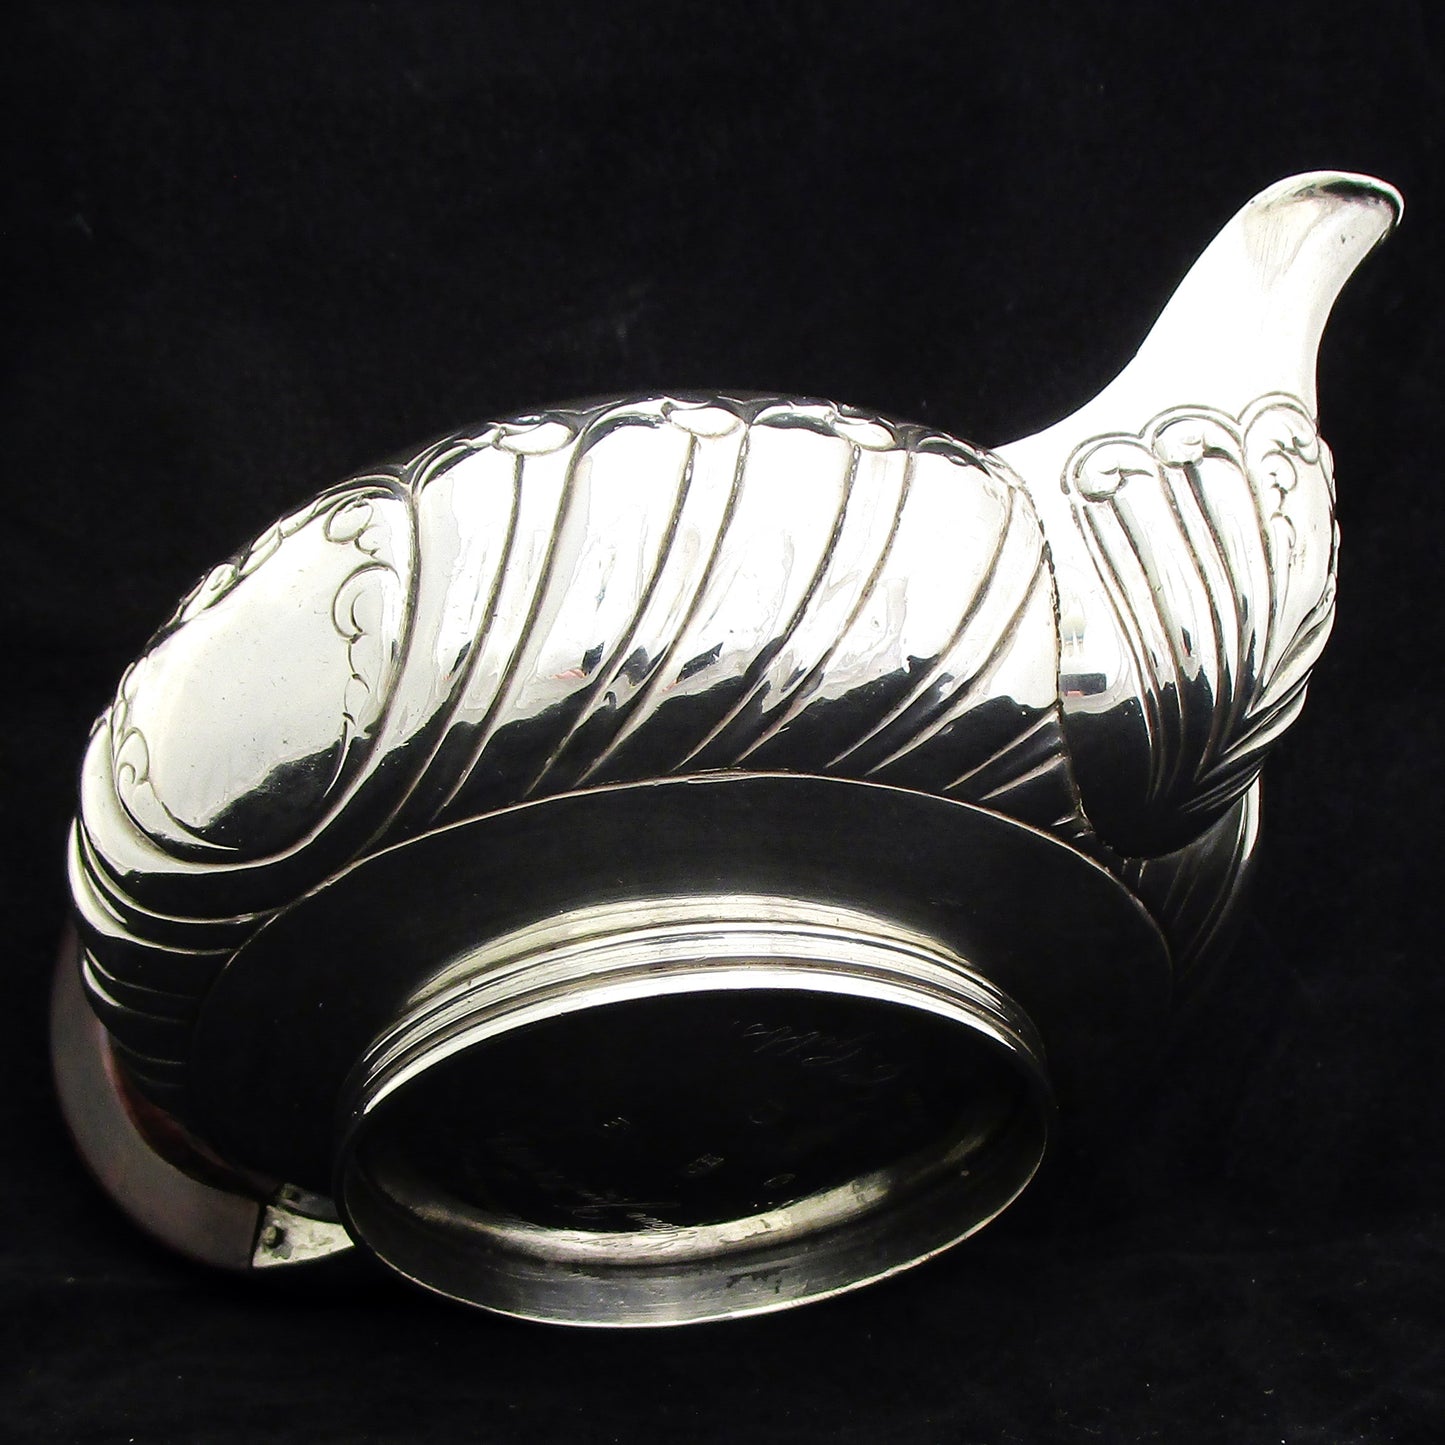 A Georgian sterling silver Bachelors tea pot.